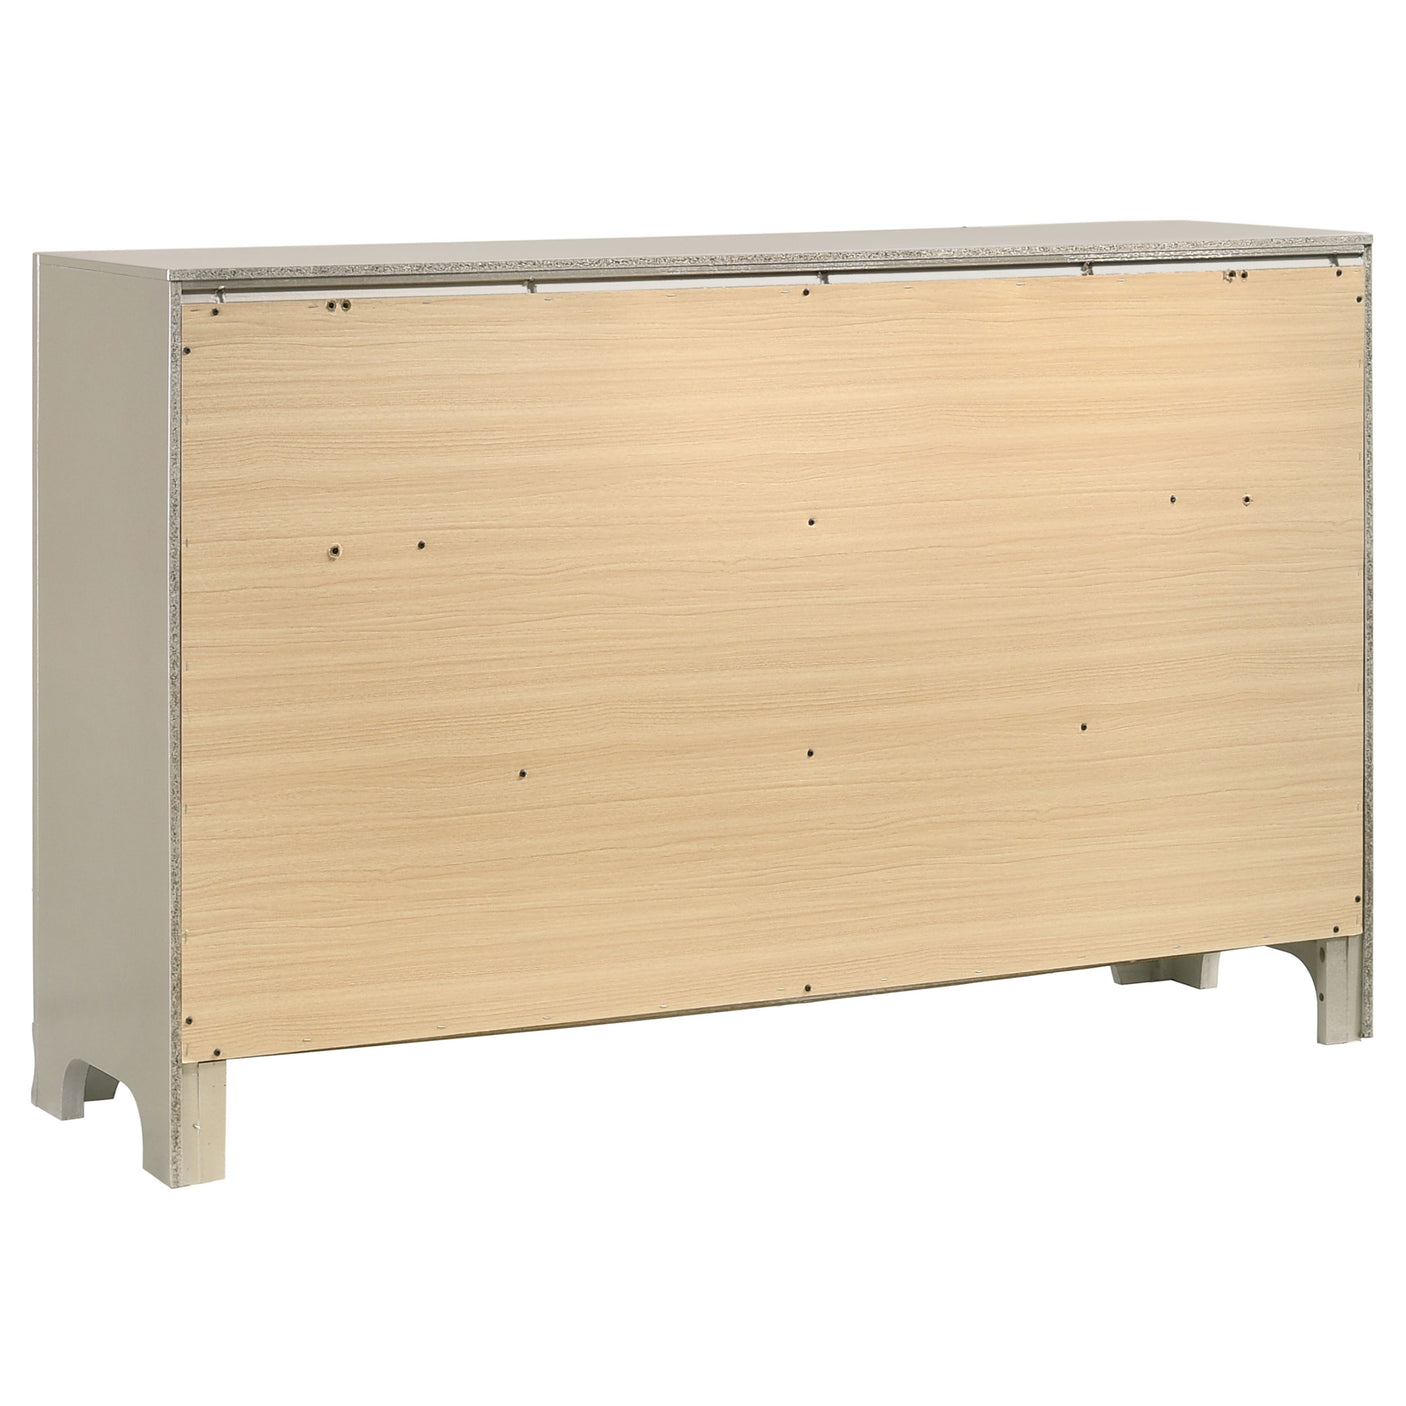 Dresser - Salford 7-drawer Dresser Metallic Sterling